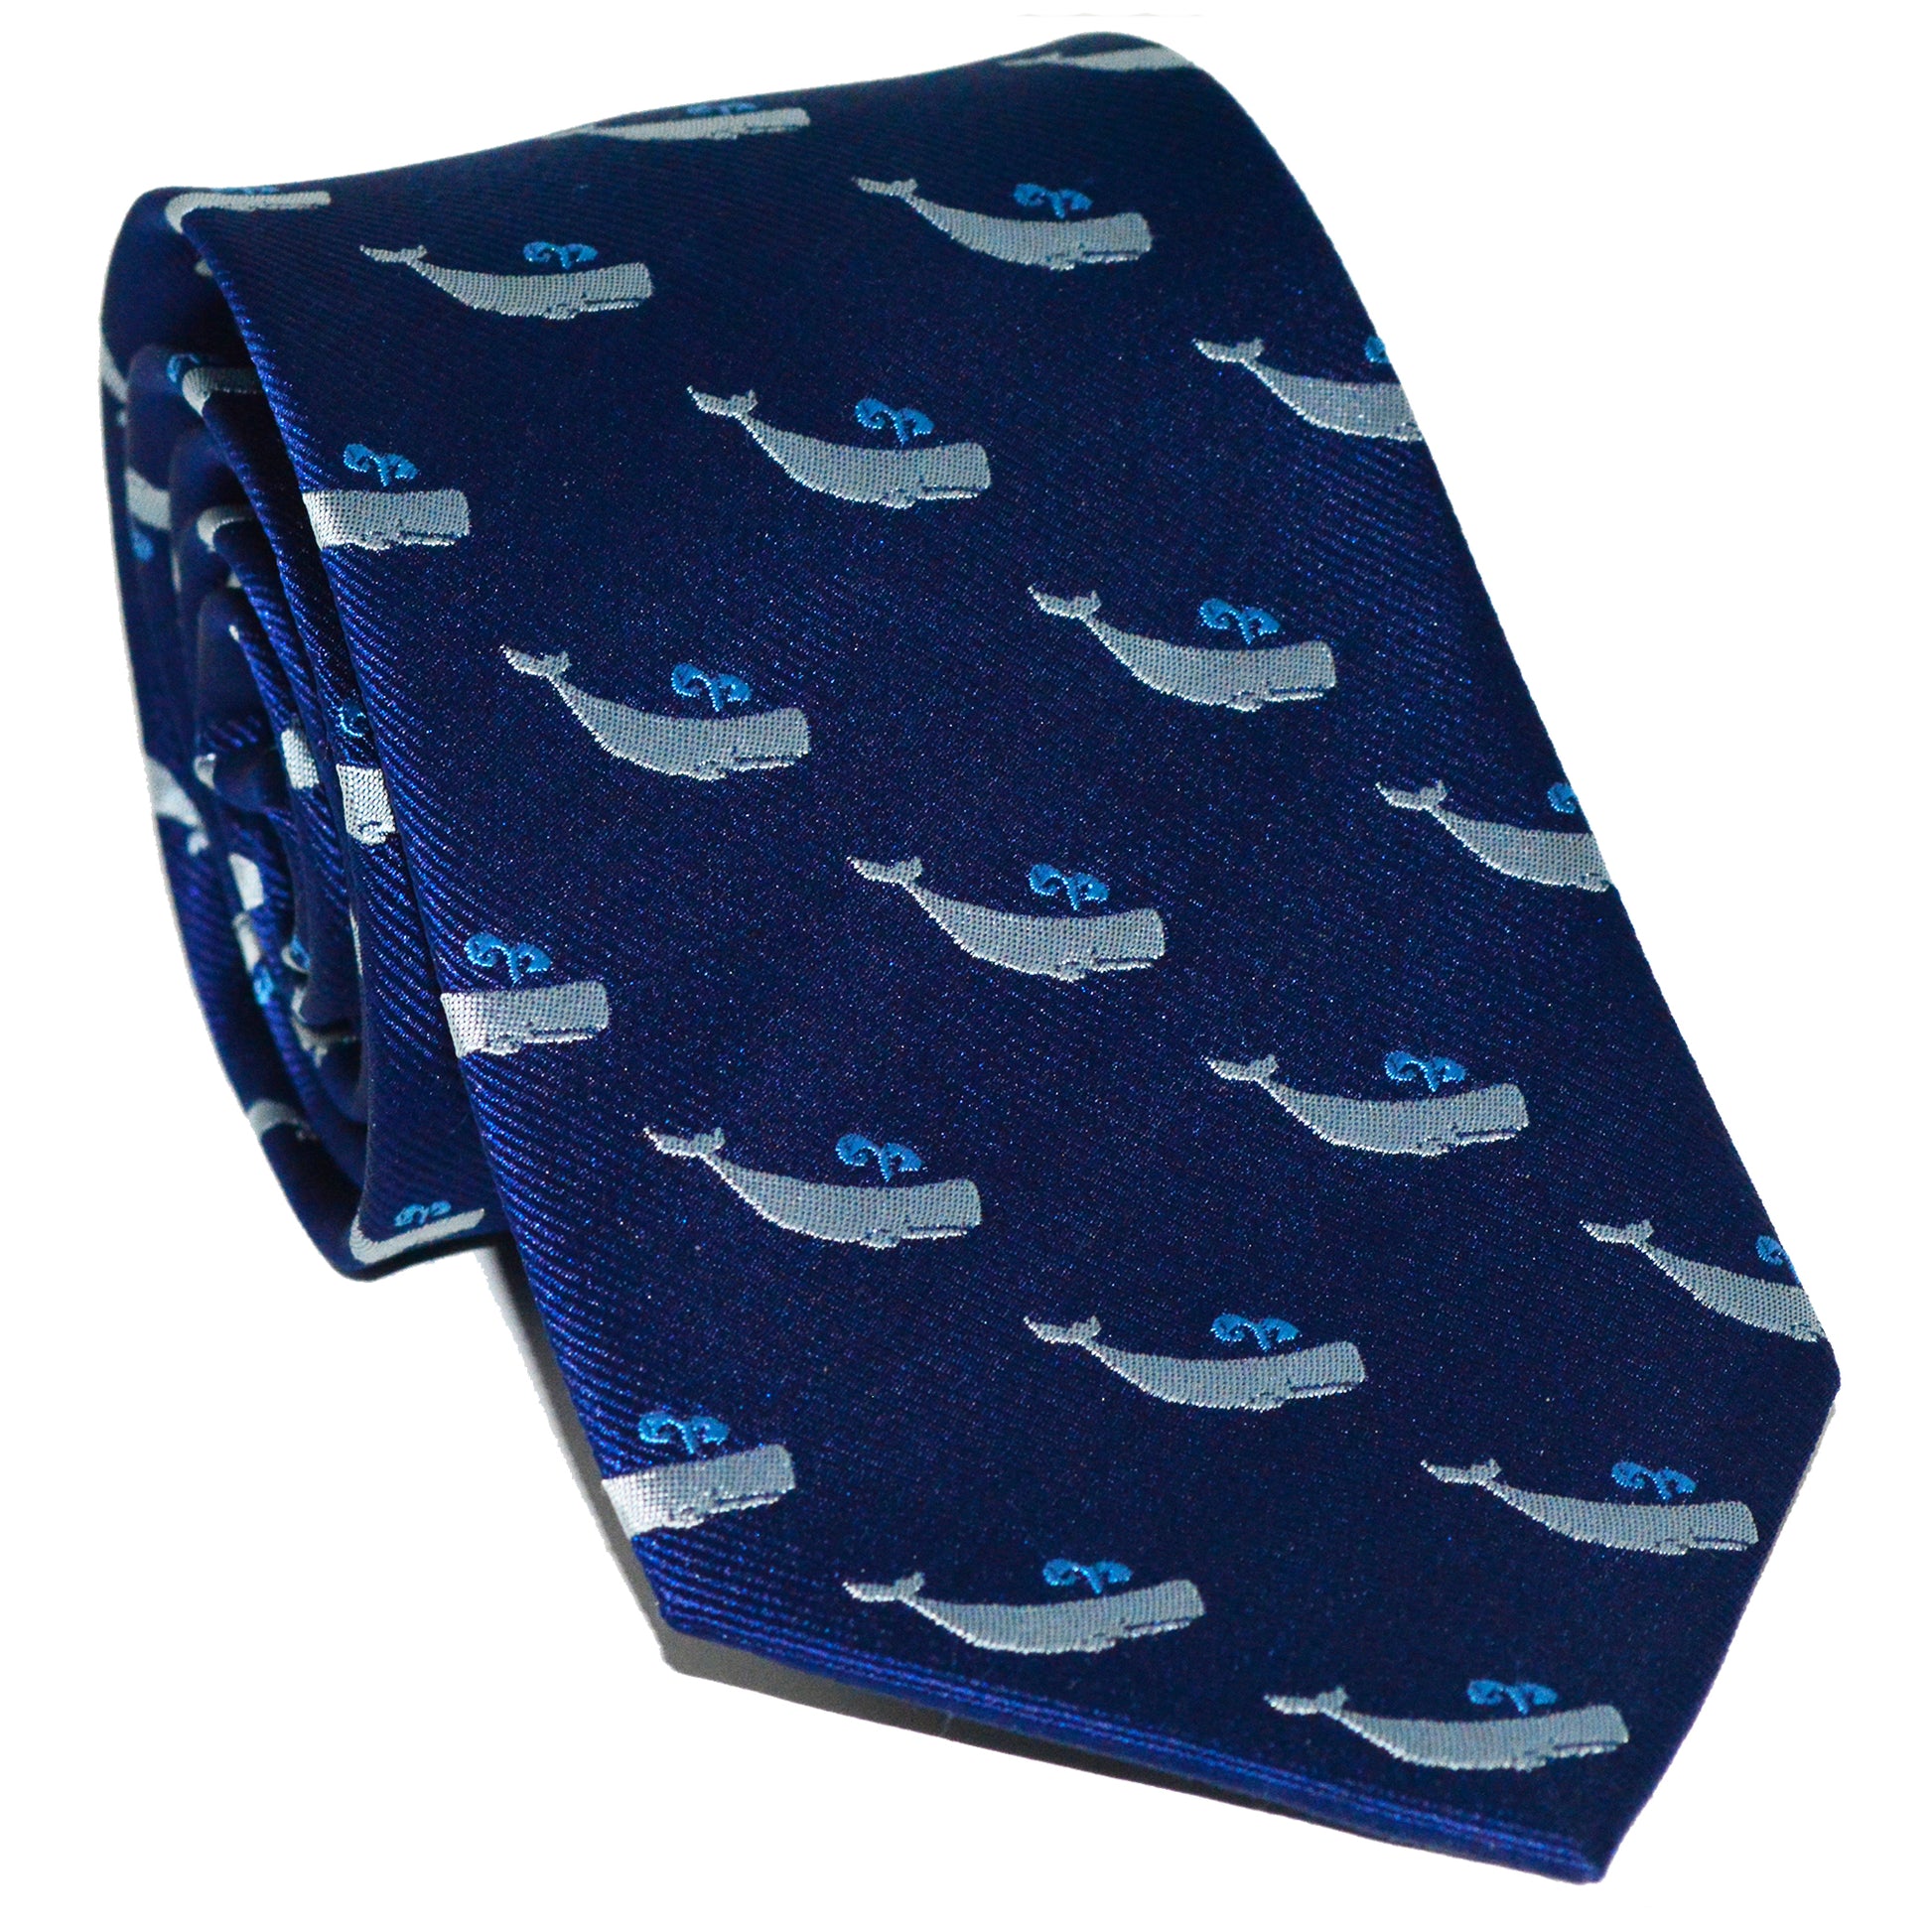 Sperm Whale Necktie - Grey on Navy, Woven Silk - SummerTies